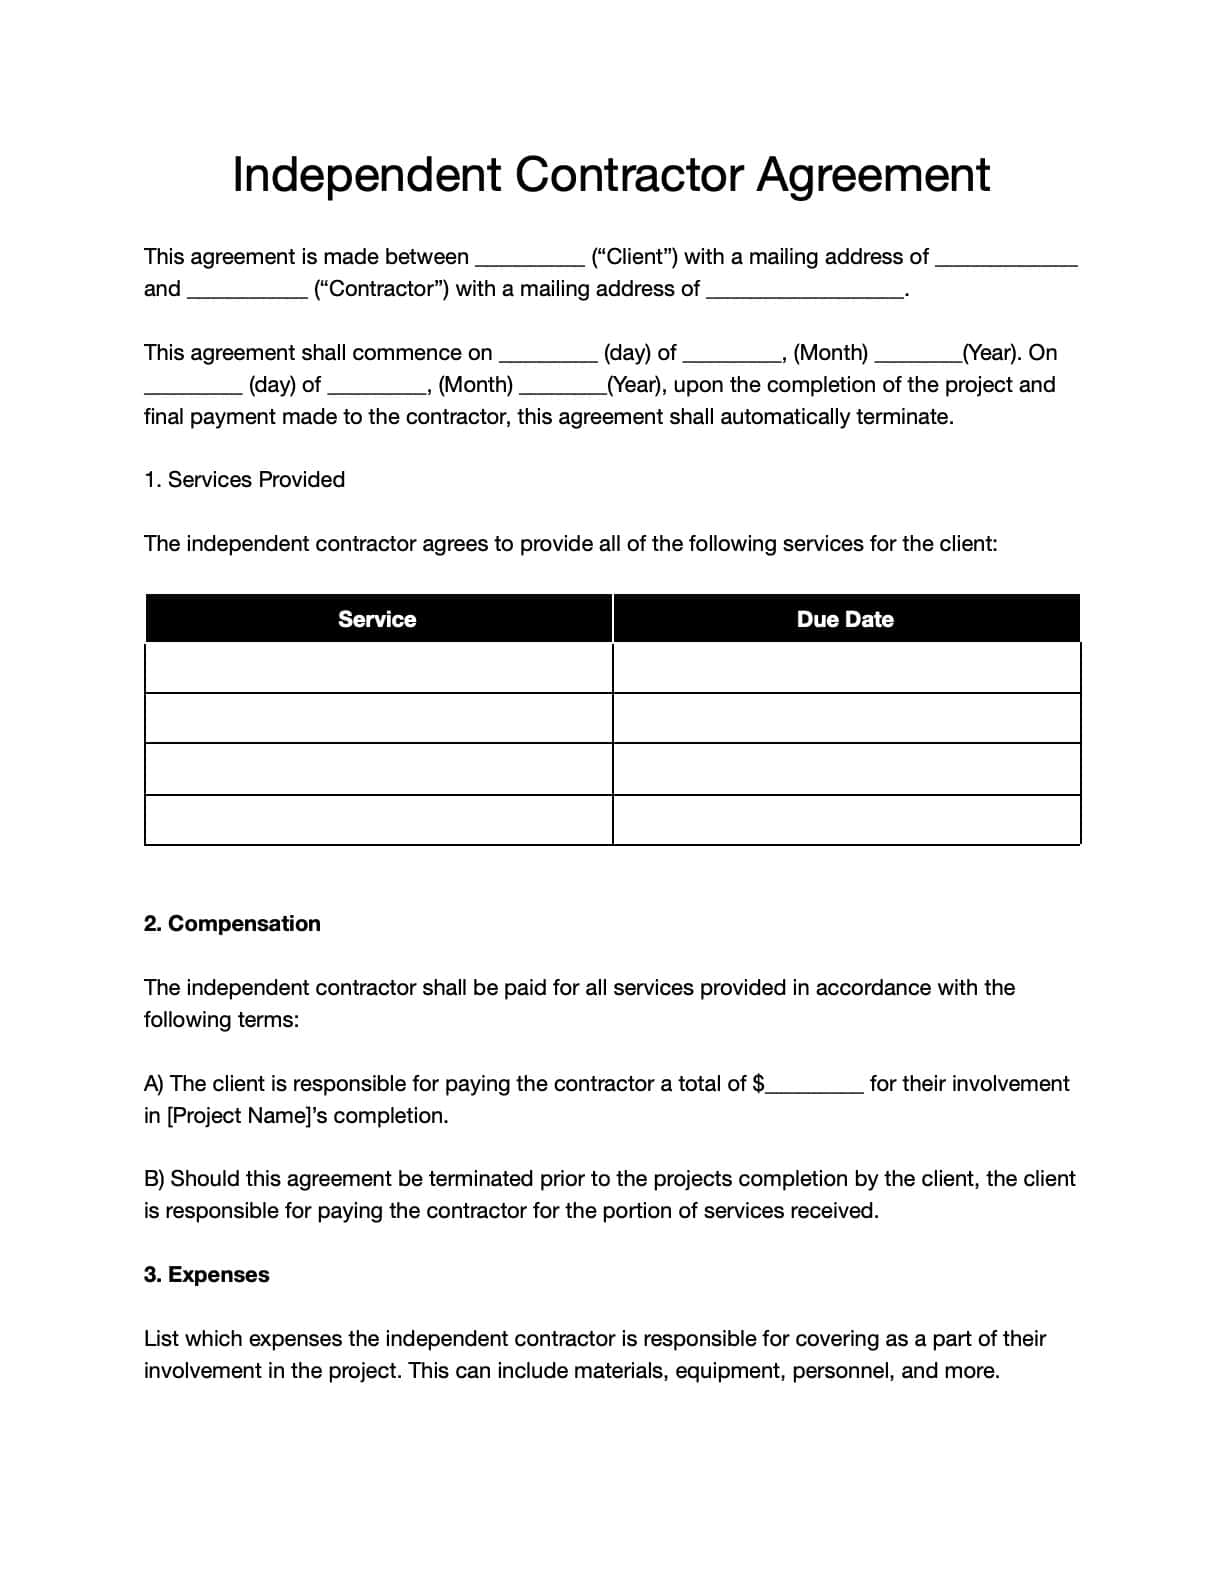 Independent Contractor Agreement 